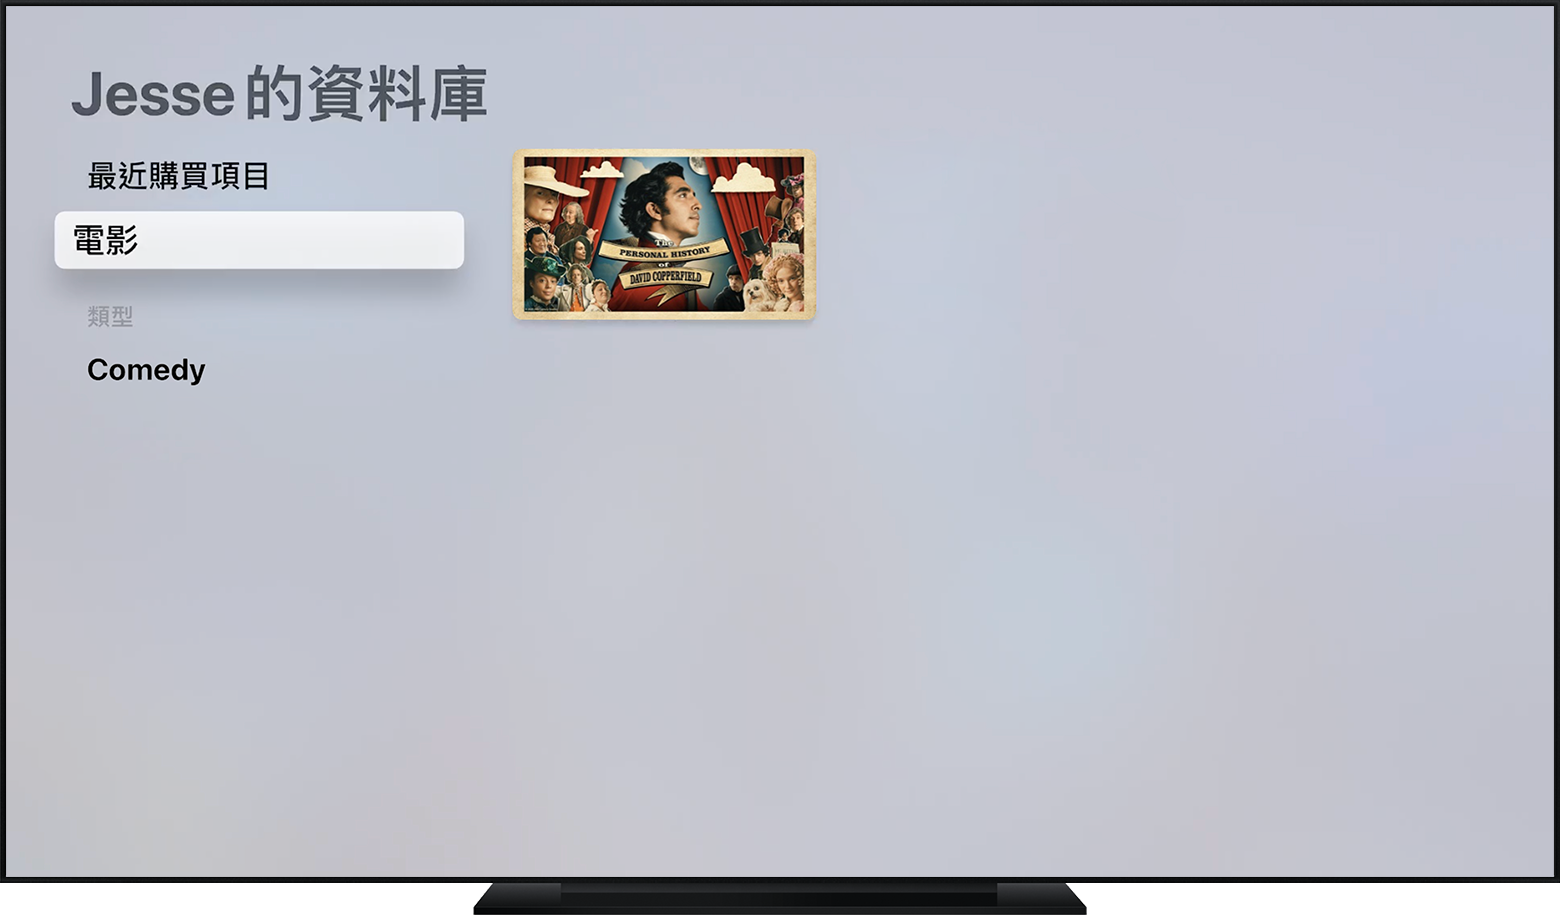 Apple TV 螢幕正顯示 Jesse 資料庫內的電影。